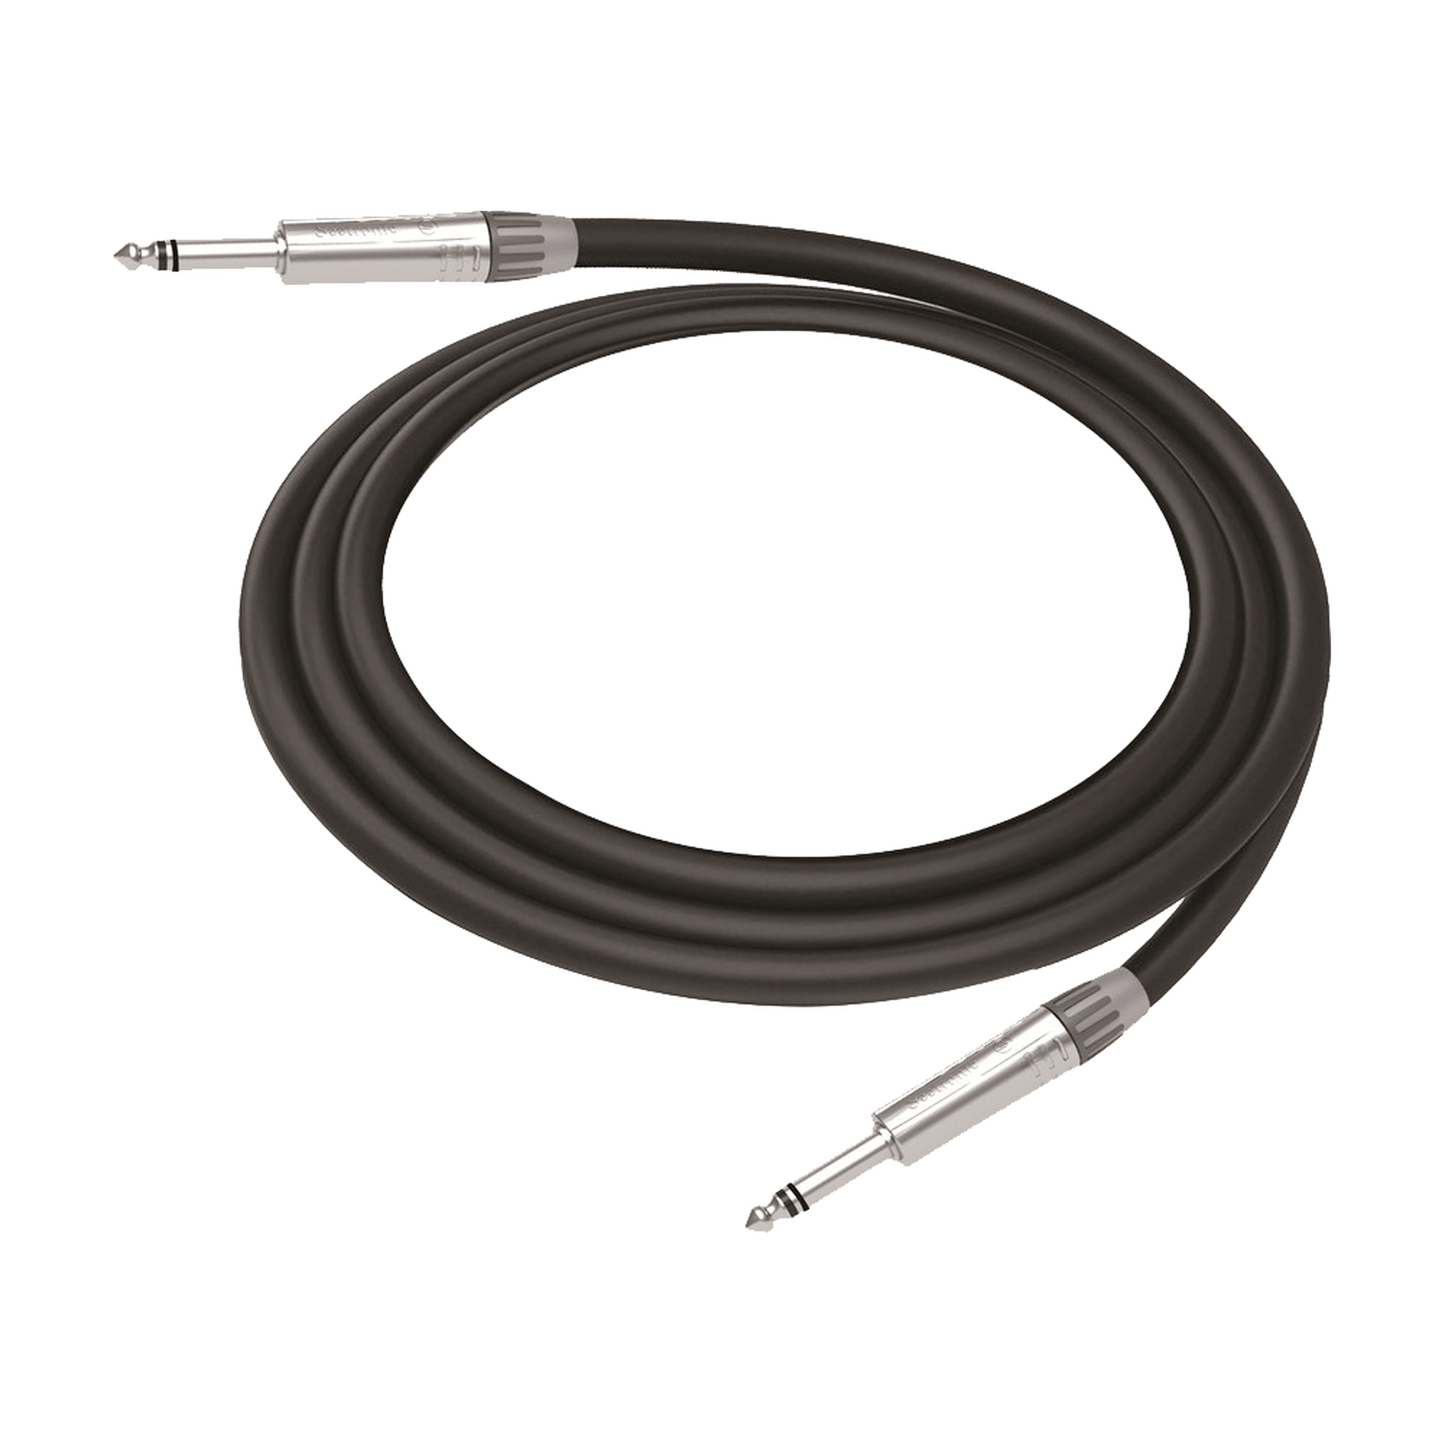 Cable de Audio | Plug 1/4 in a Plug 1/4 in Stereo | Carcasa Cromada | Conectores Seetronic | Longitud 5m